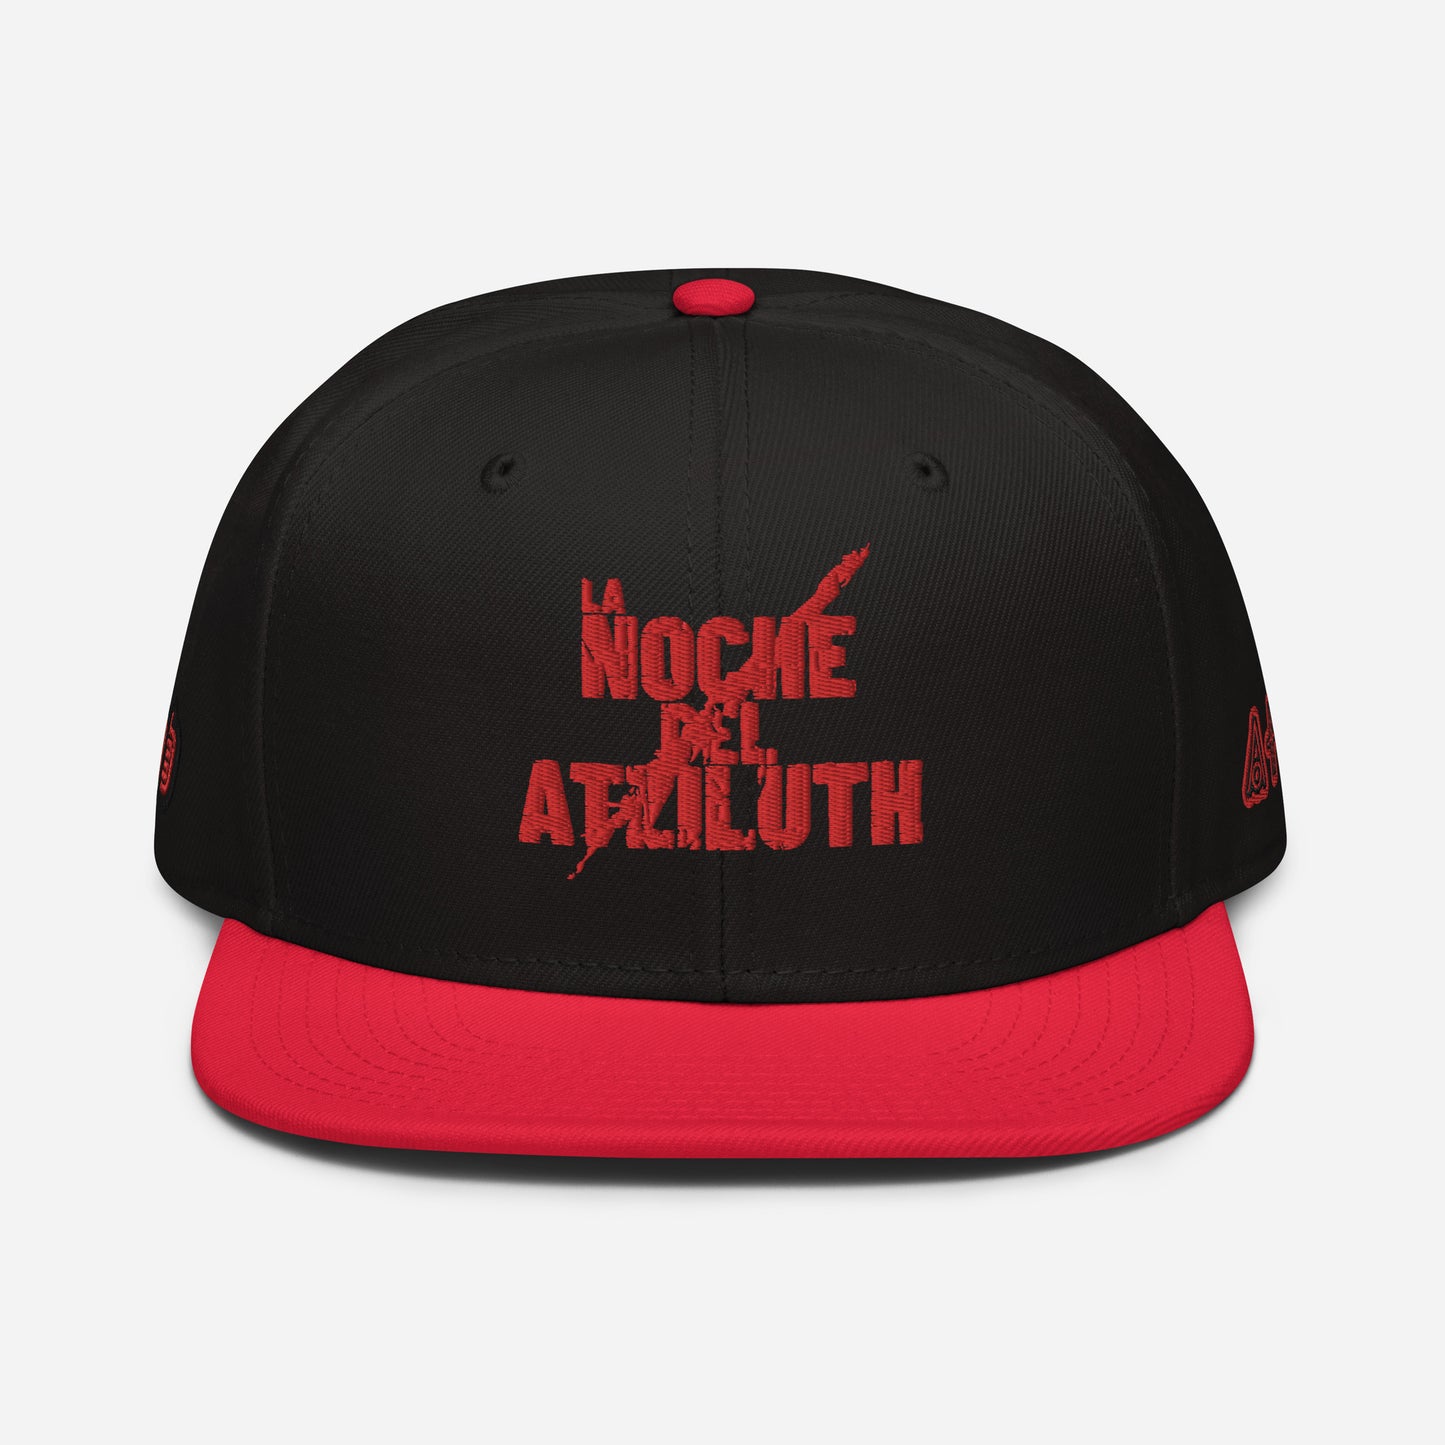 Atziluth Gallery " La Noche" Snapback Hat